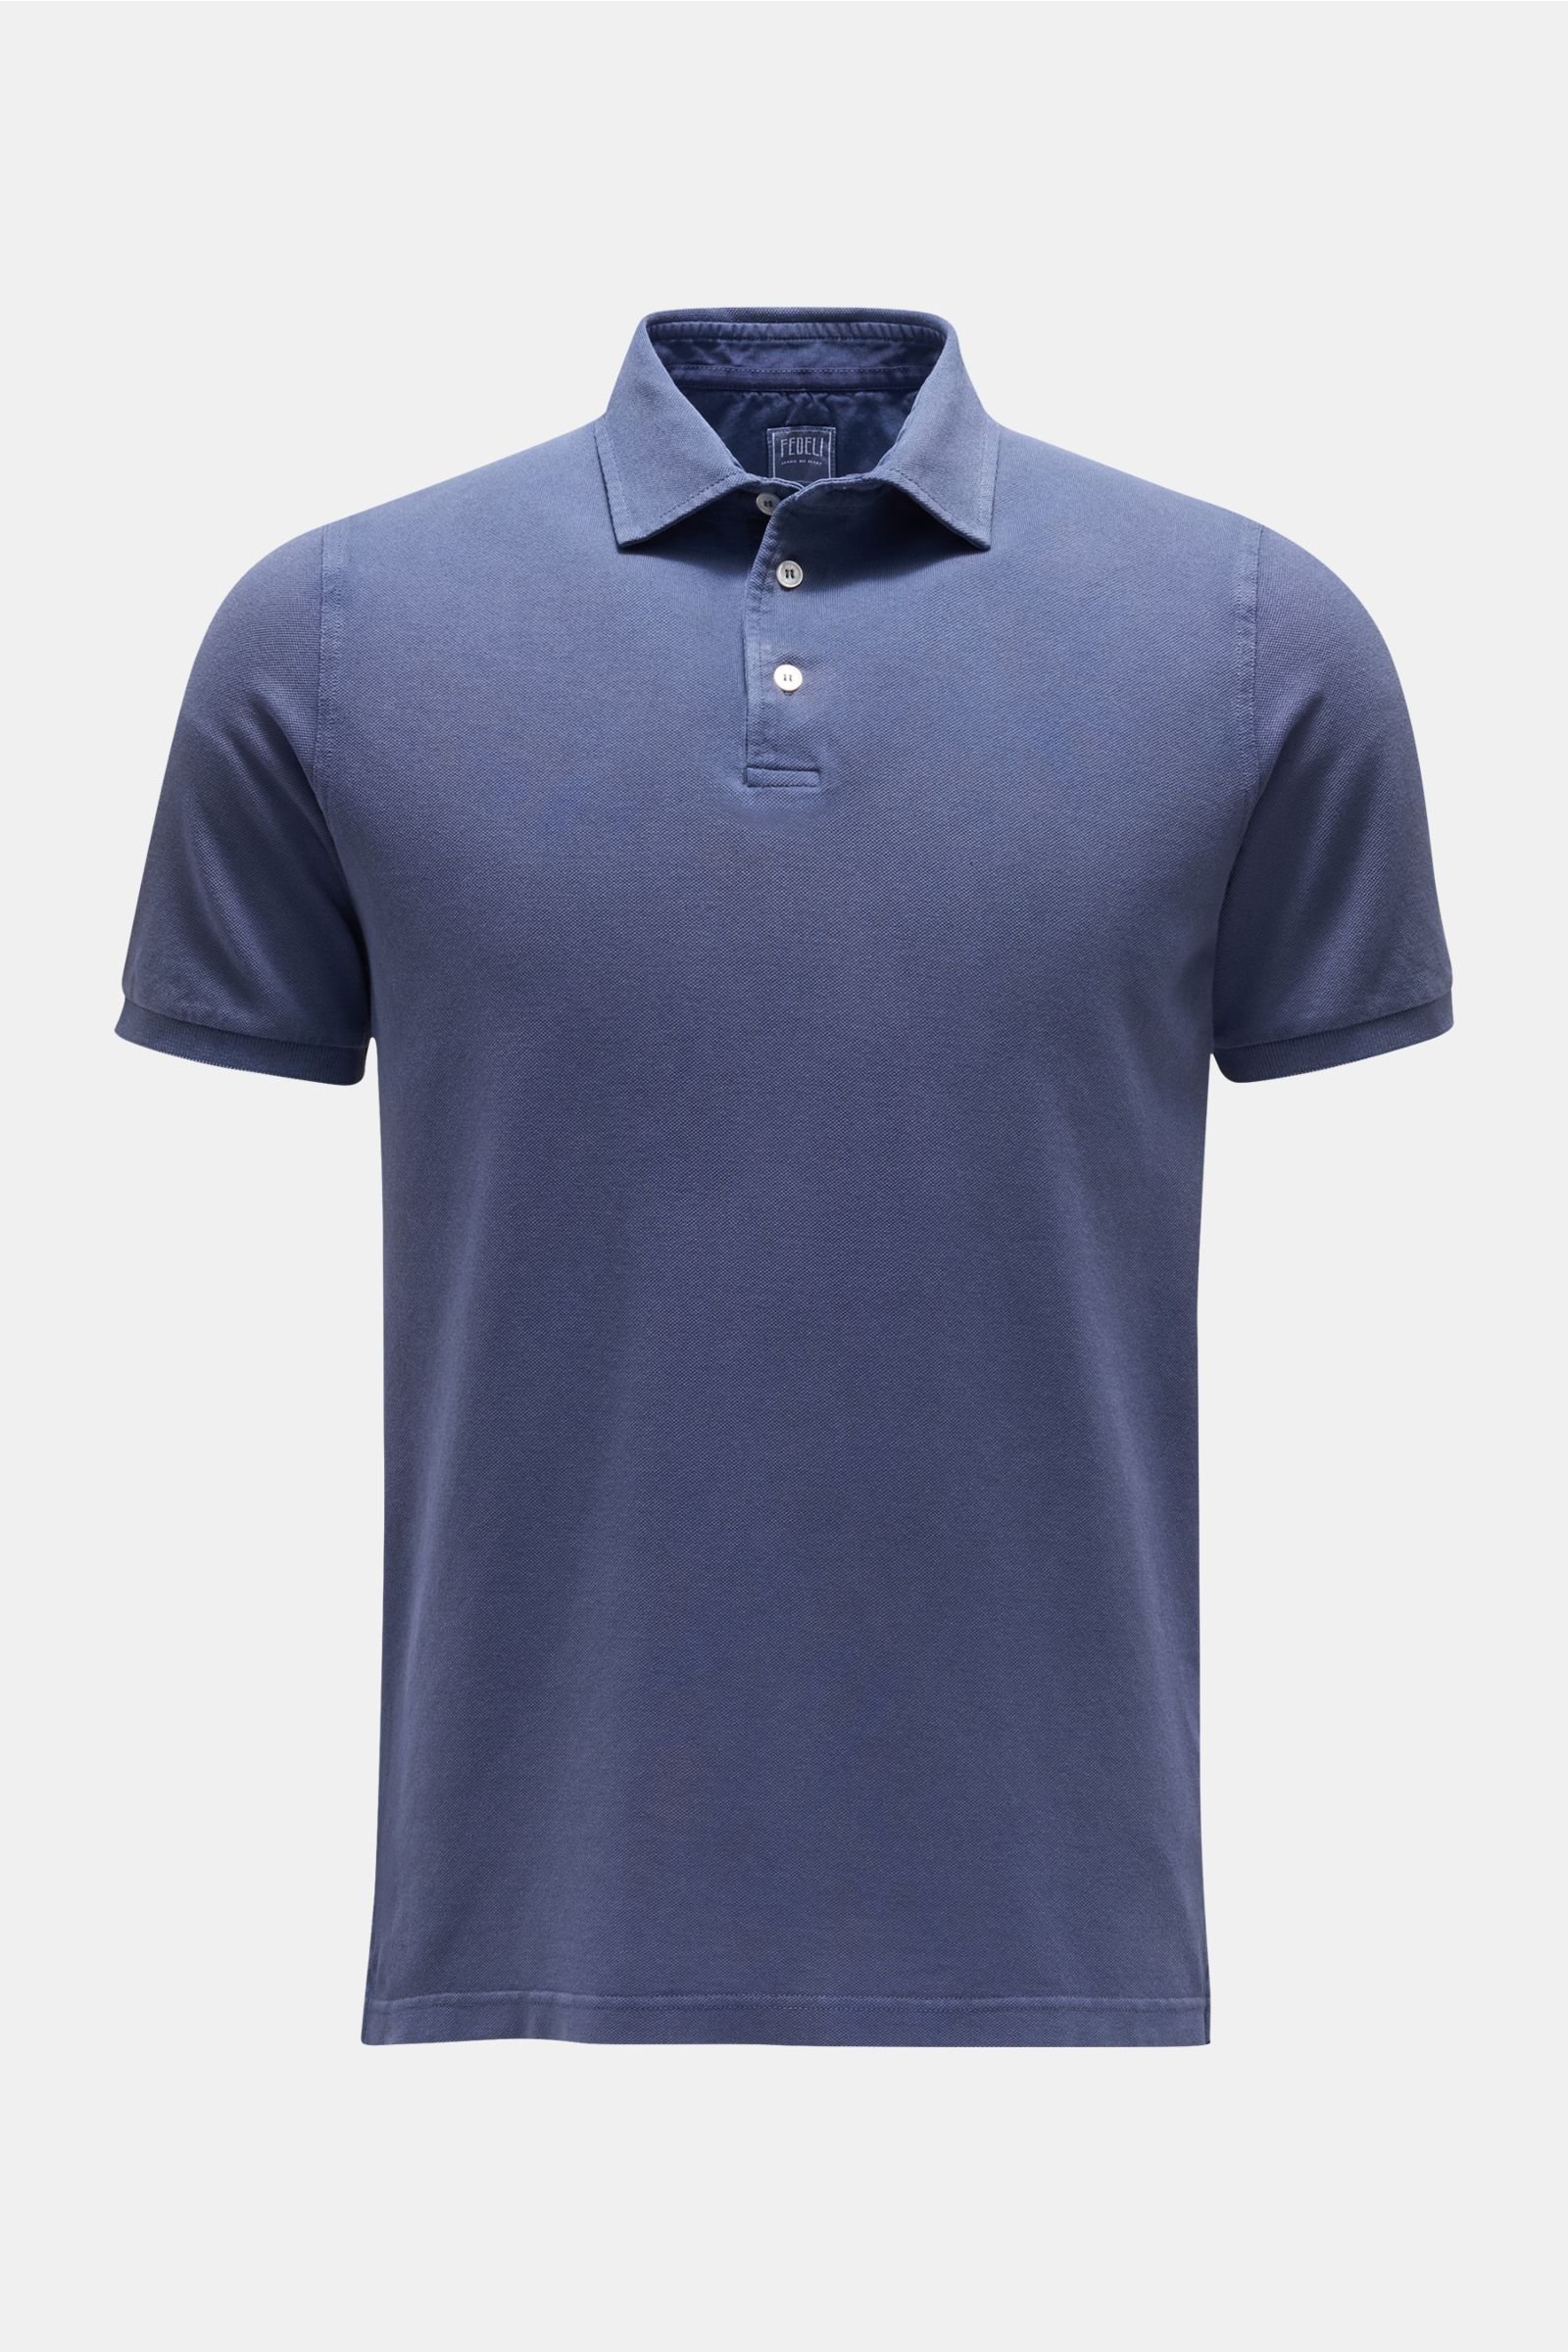 Polo shirt 'North' grey-blue